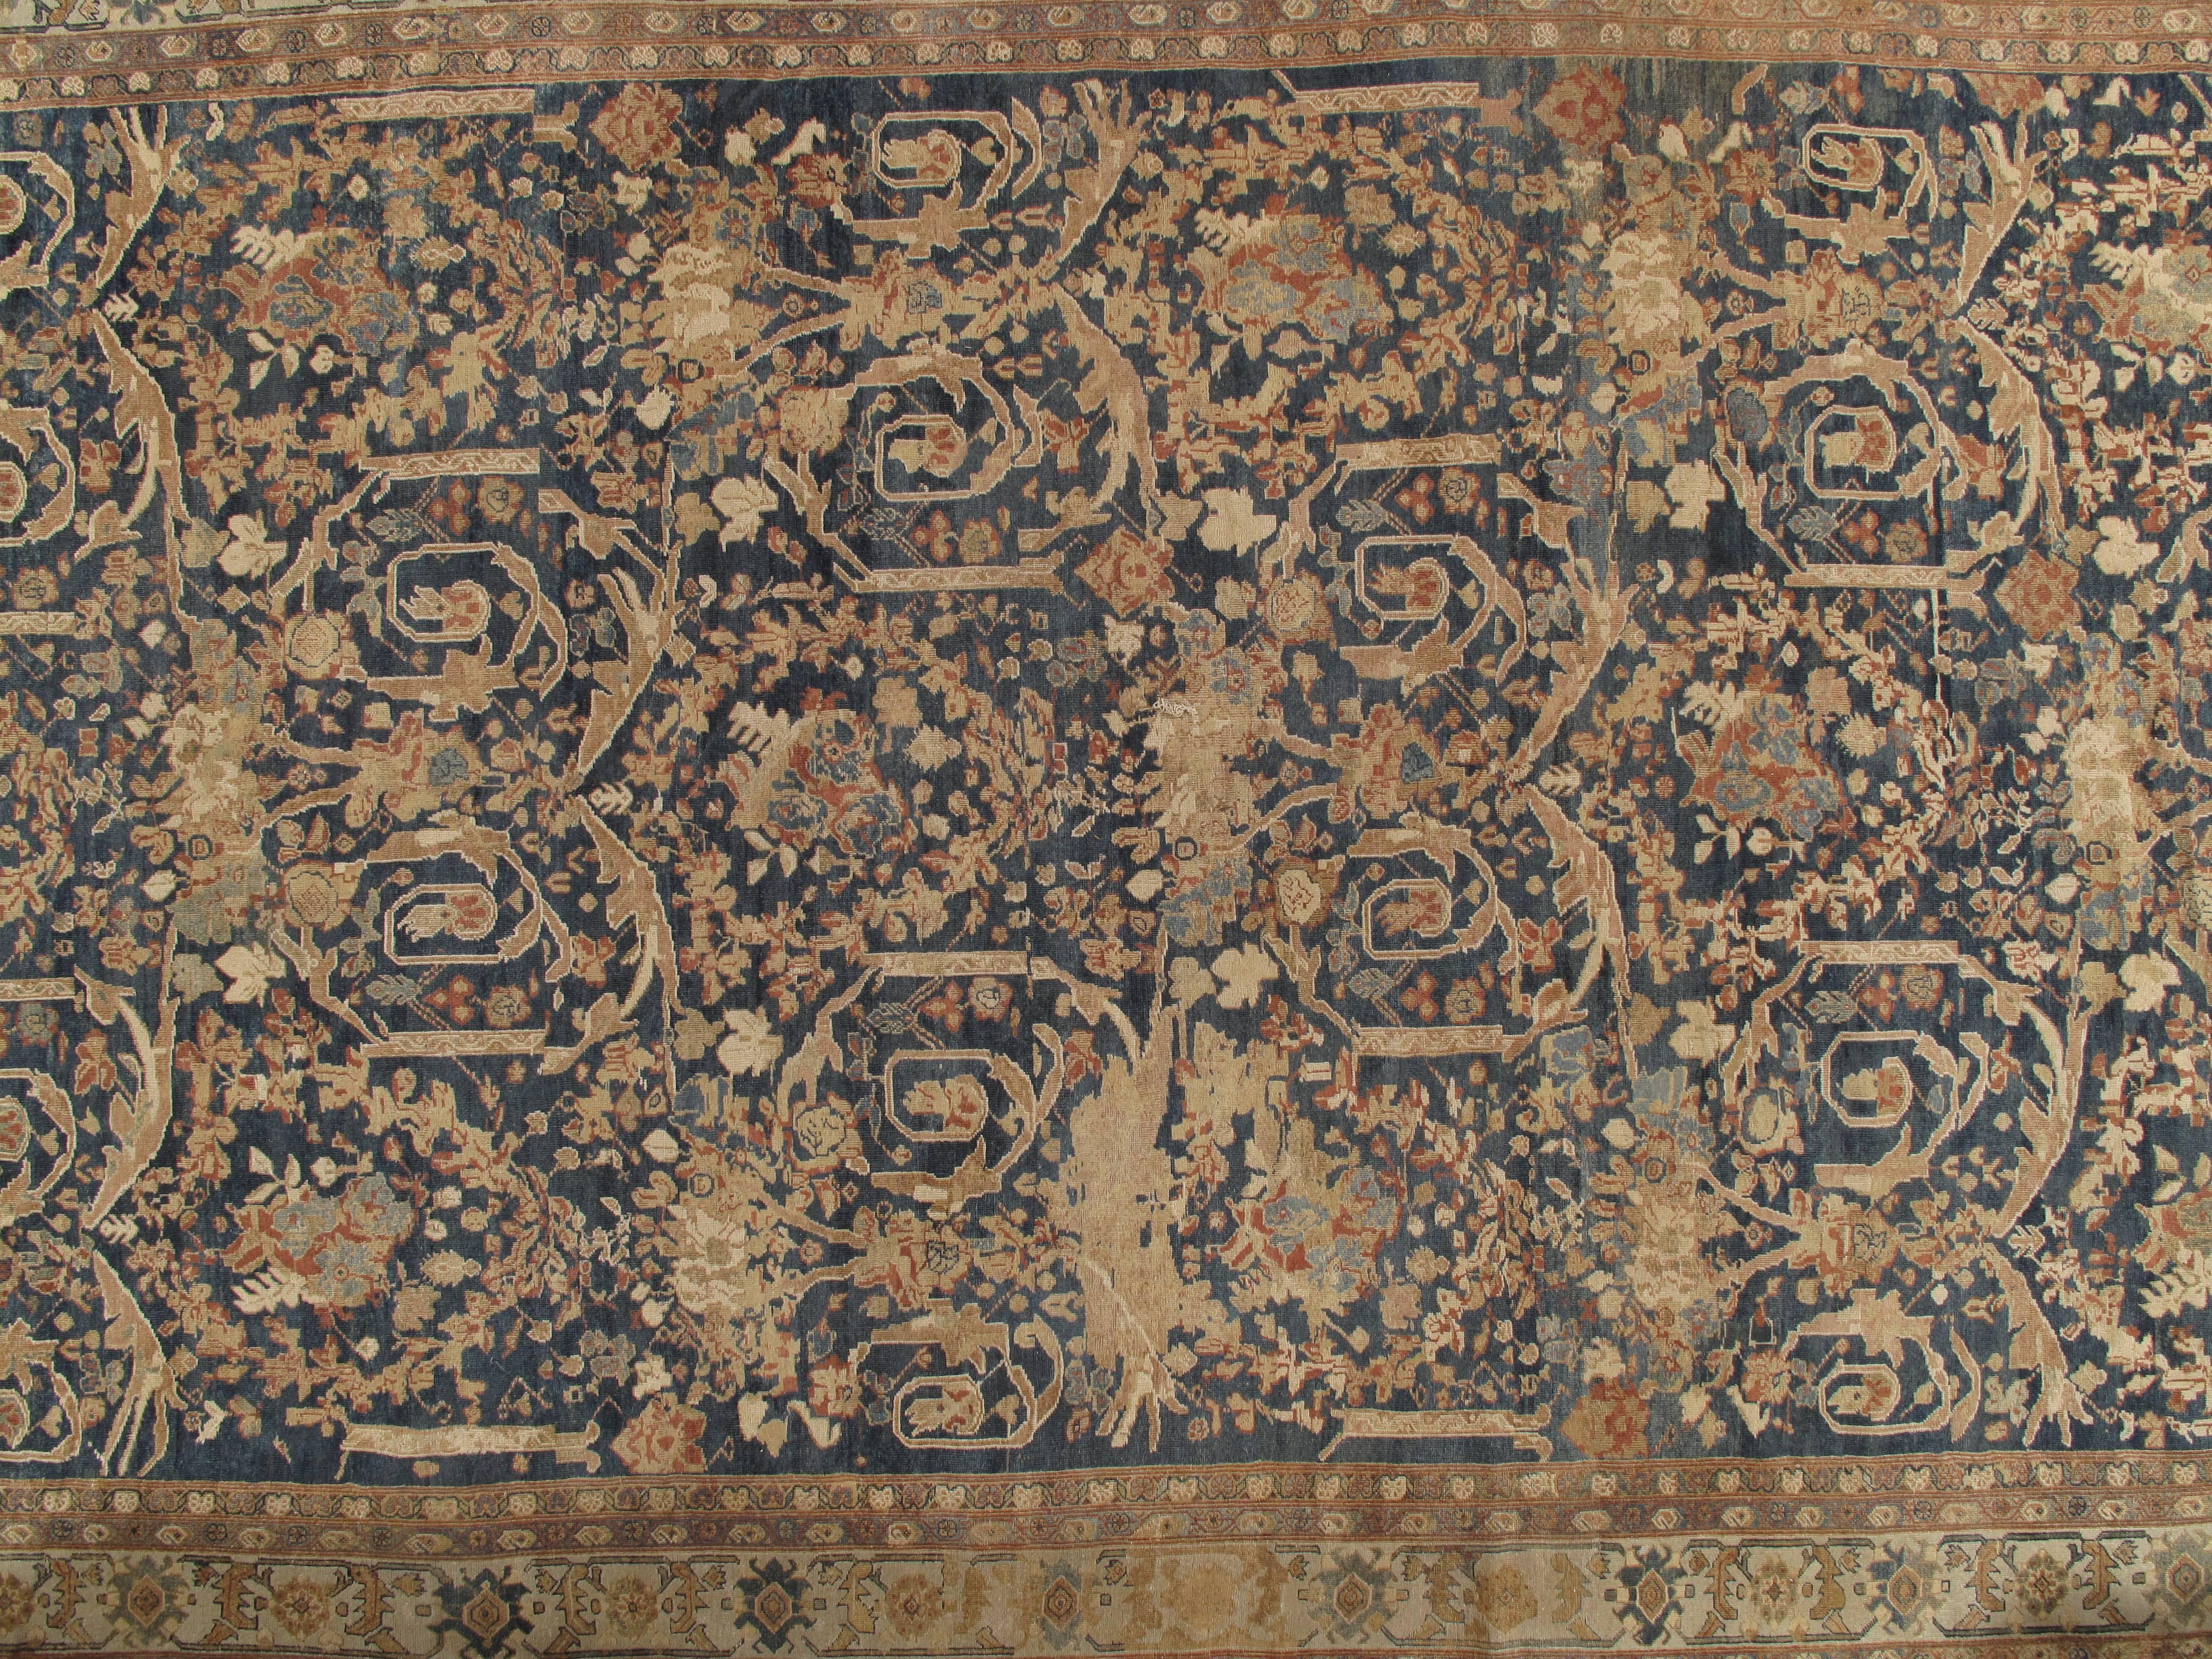 19th Century Antique Sultanabad Carpet, Persian Handmade Wool Rug, Soft Navy, Light Blue Ivor